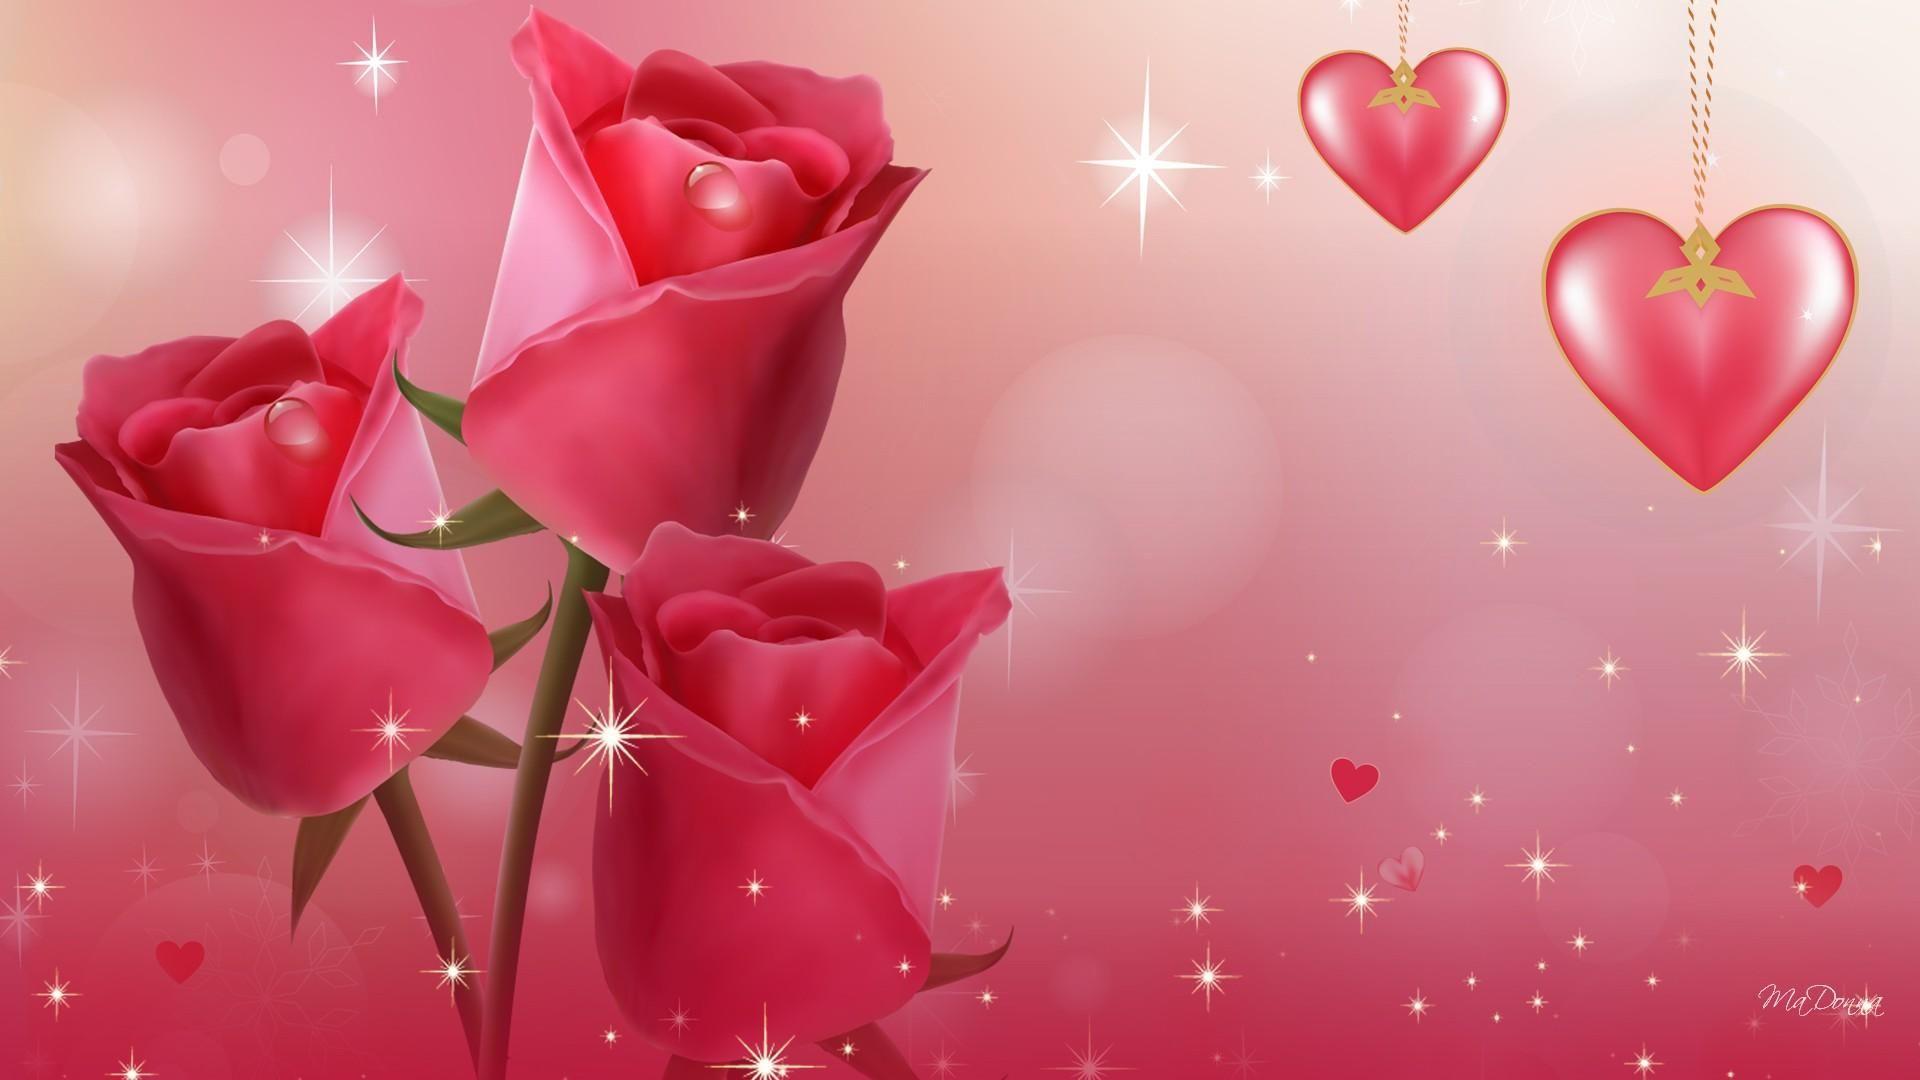 Cute and Beautiful Love Wallpaper Free Download HD